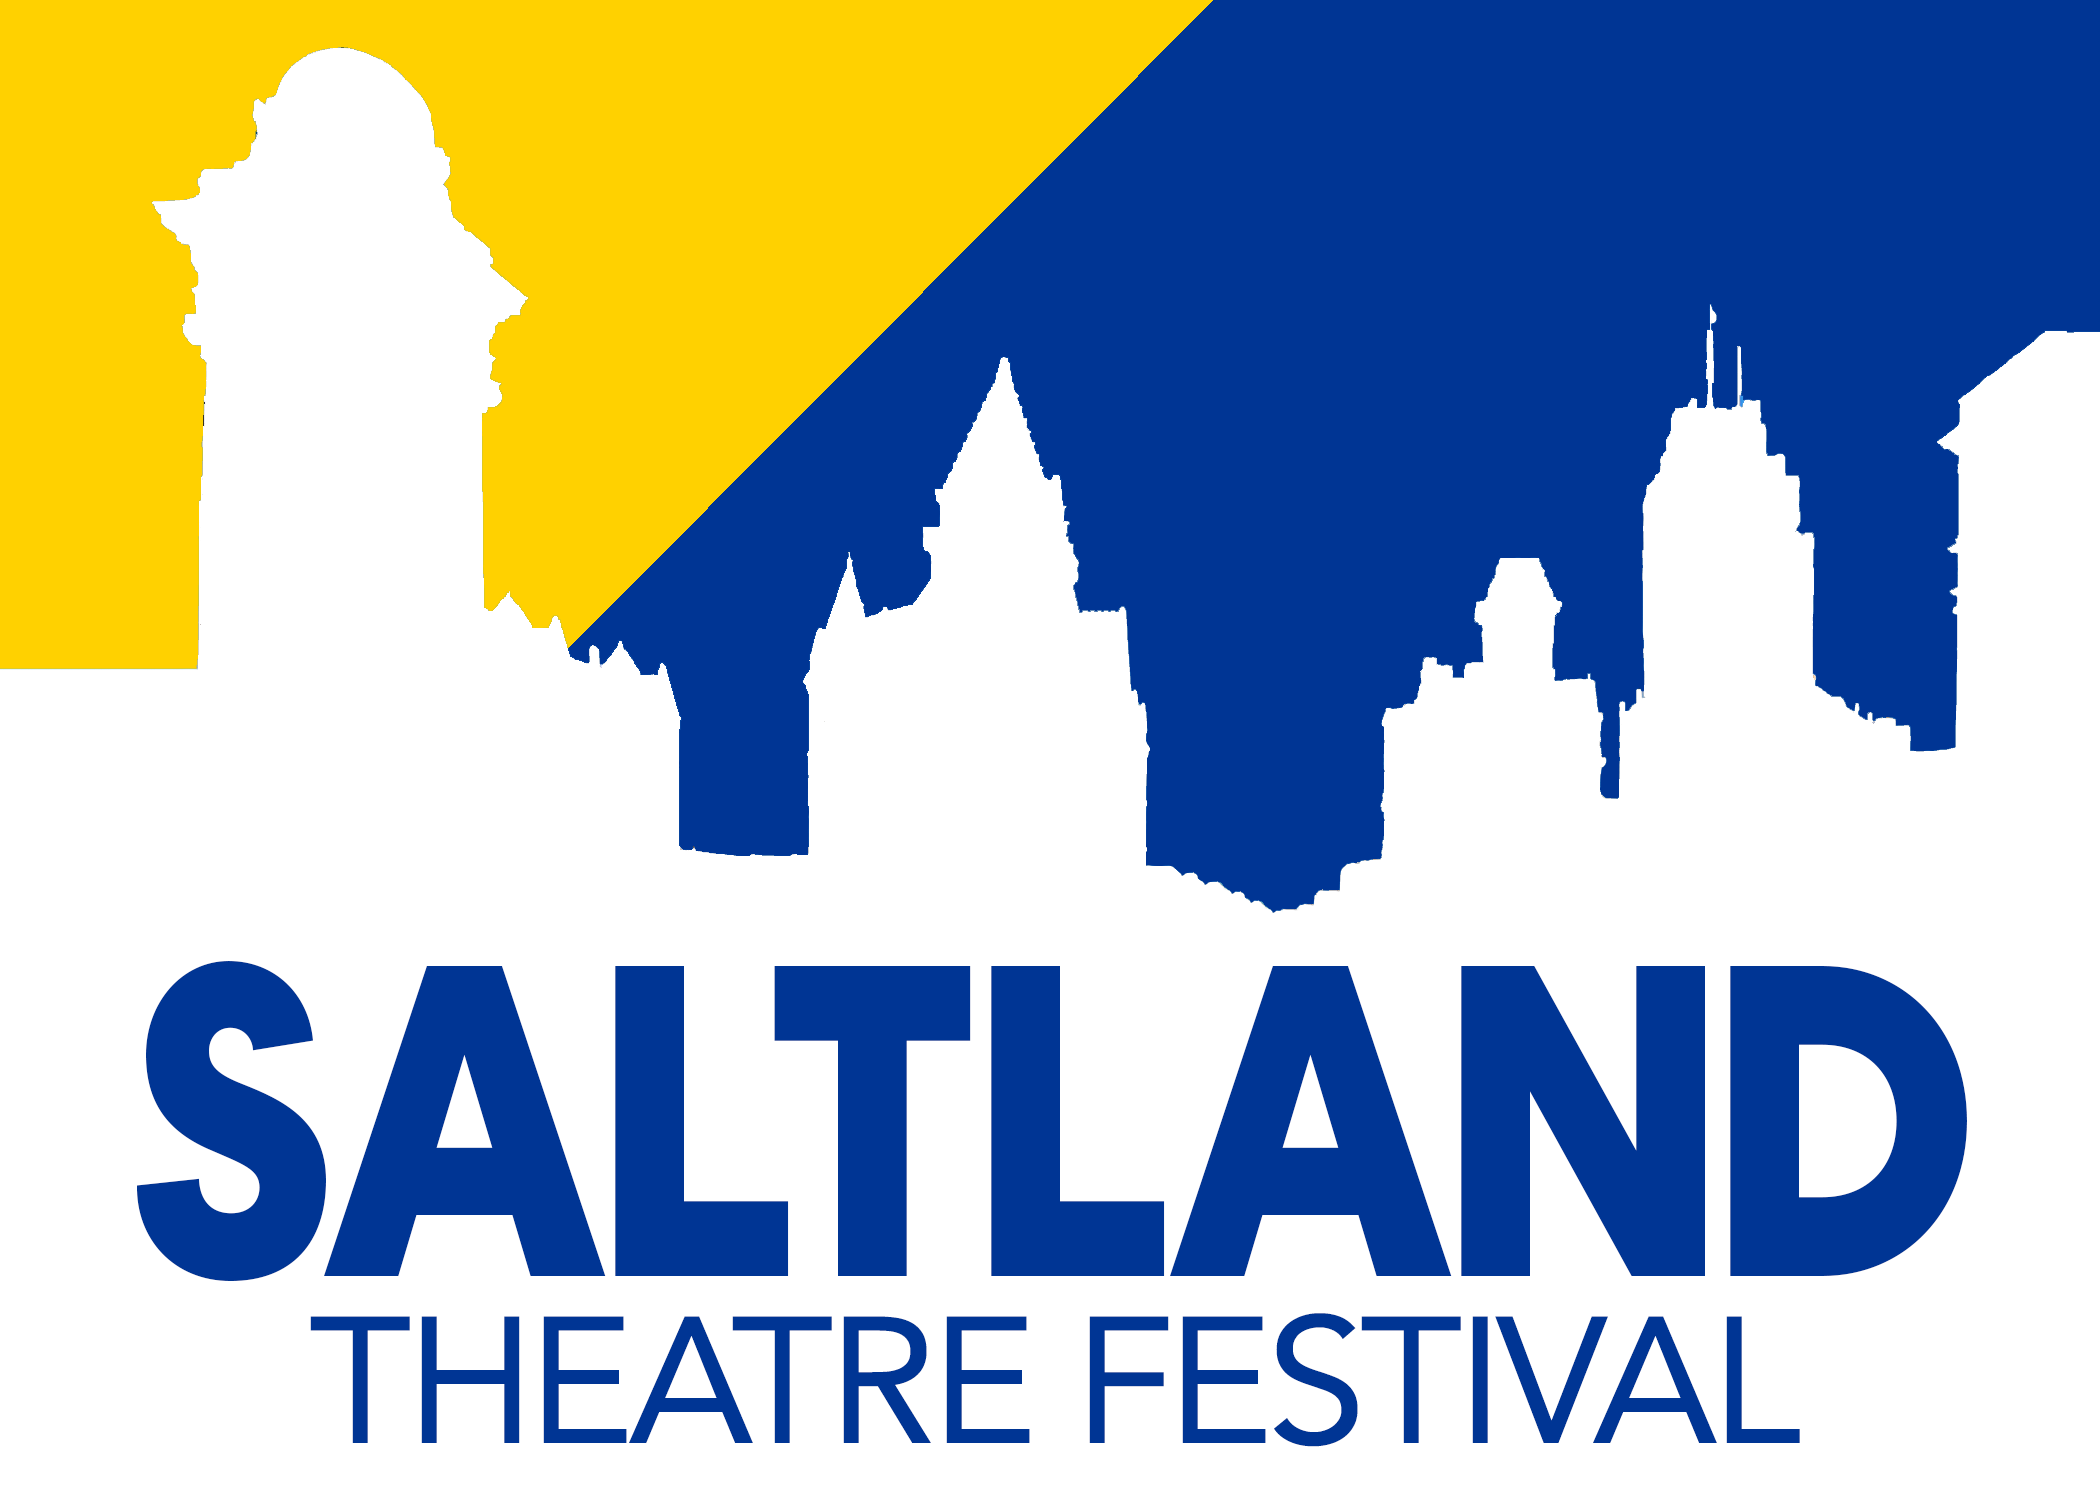 SALTLAND Theatre Festival